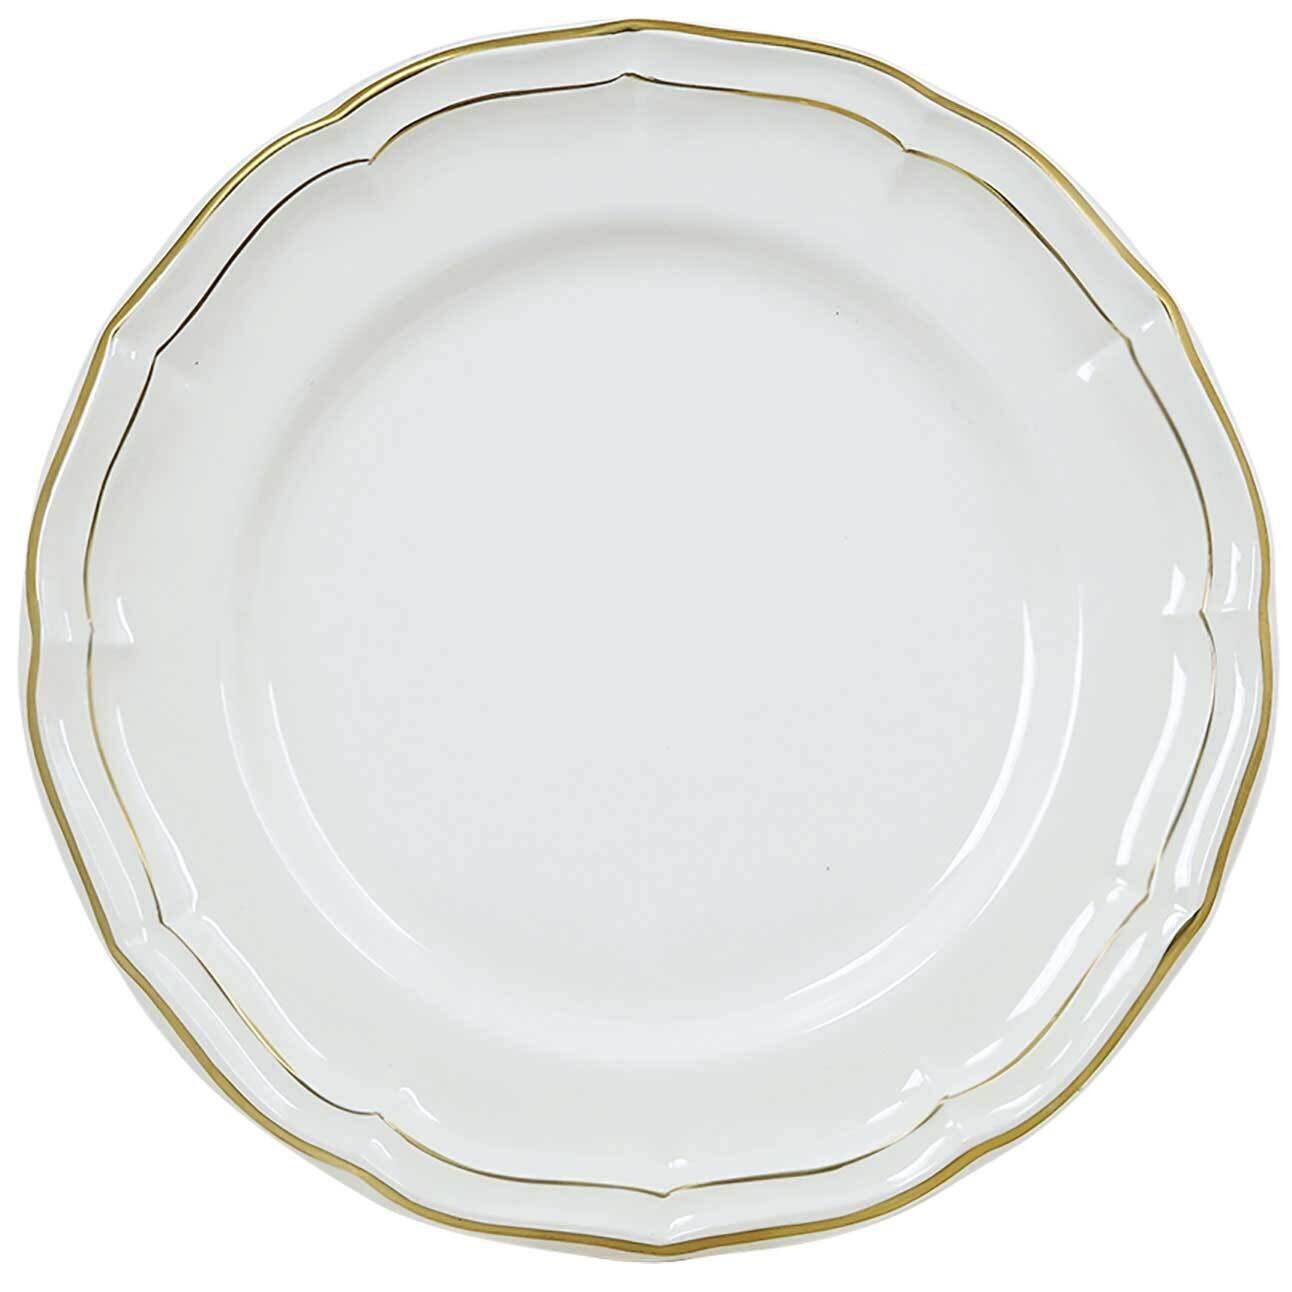 Gien Filet Or Gold Dinner Plate 1837CAEX22